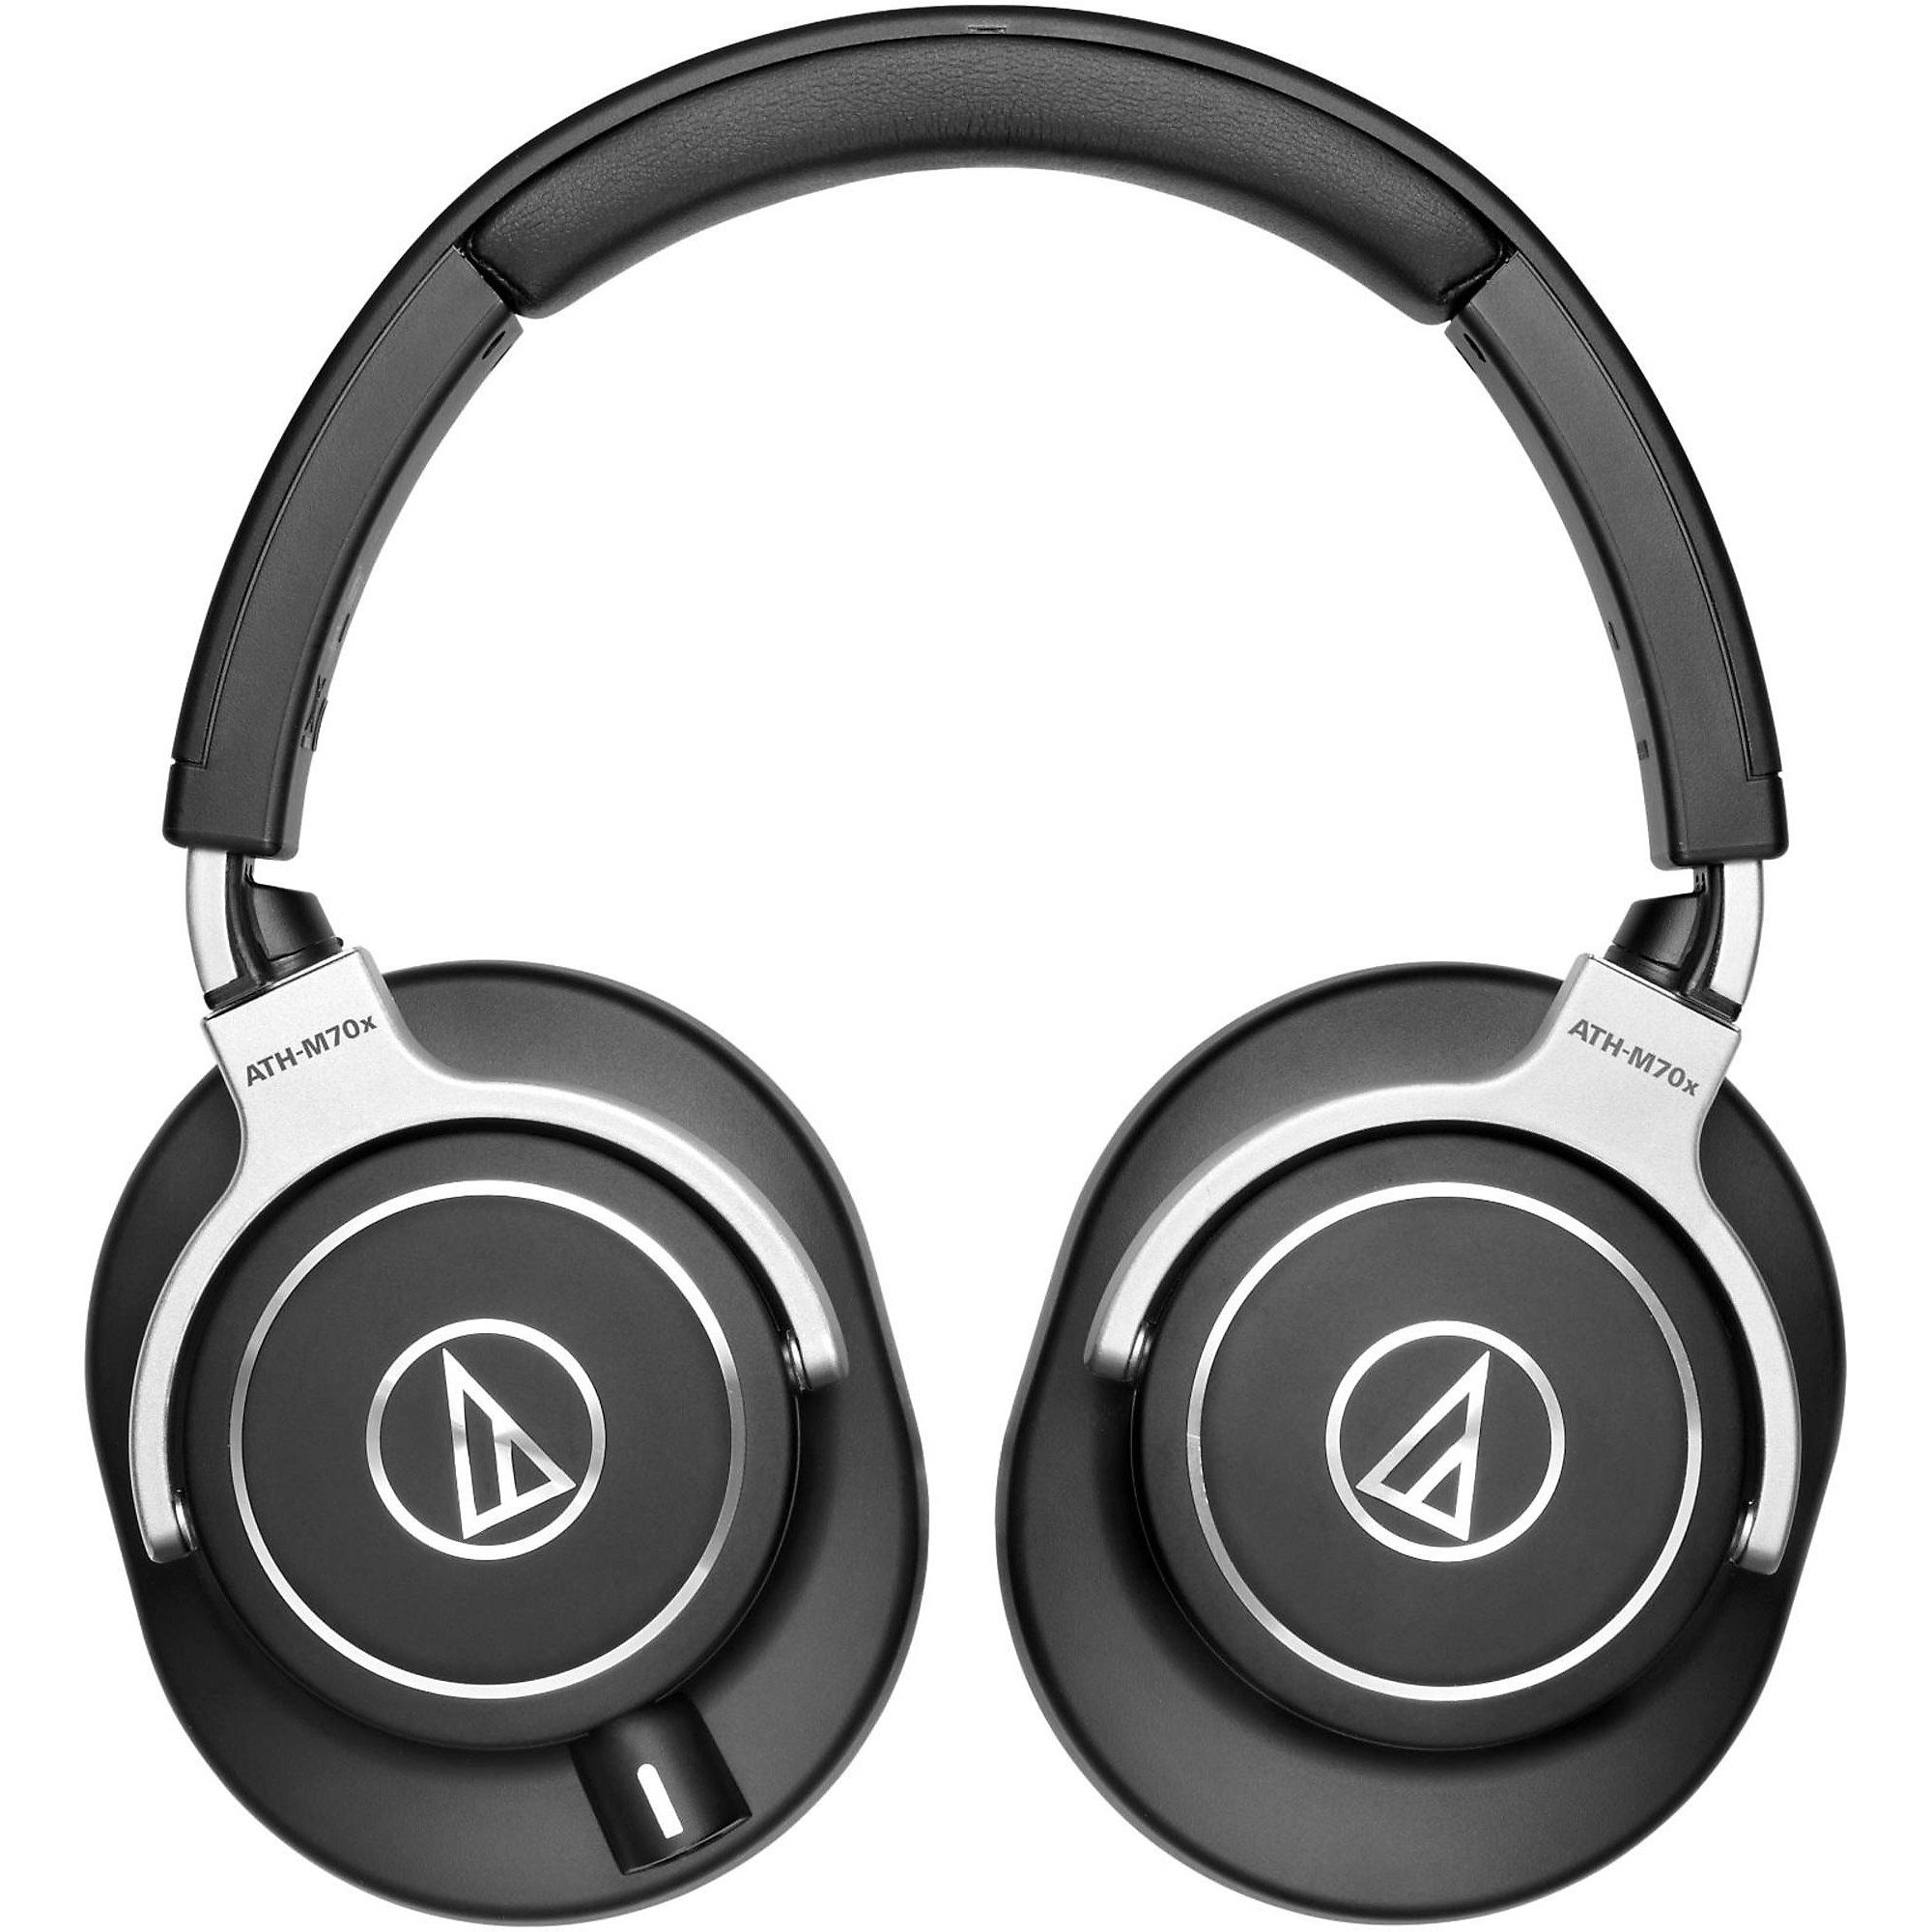 Audio-Technica ATH-M70x Professional Studio Monitor Headphones